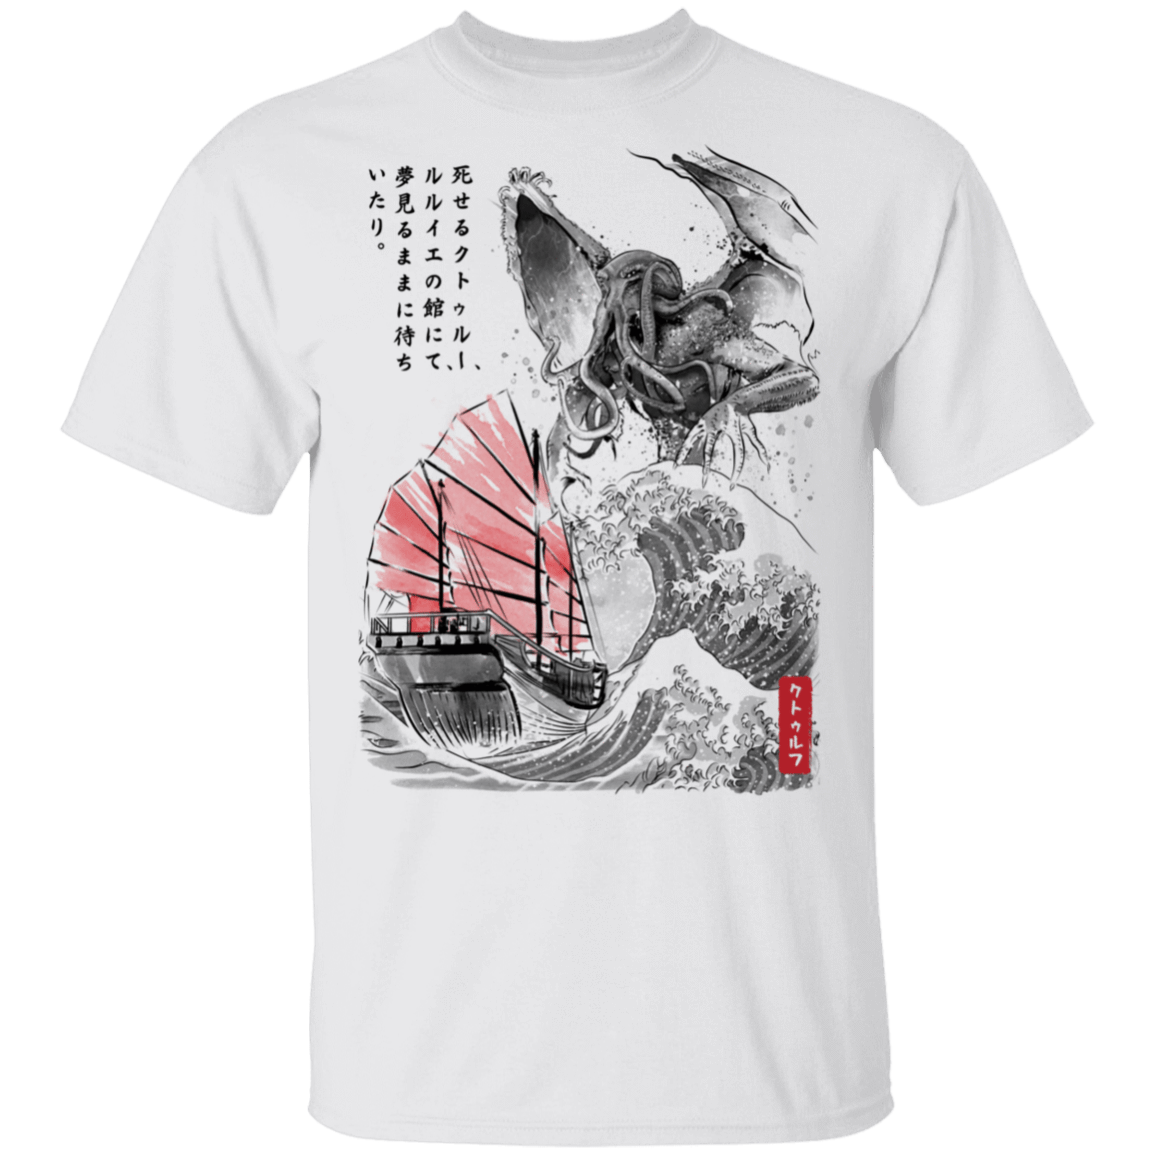 Vintage Samurai X Japanese anime series t-shirt -  Portugal